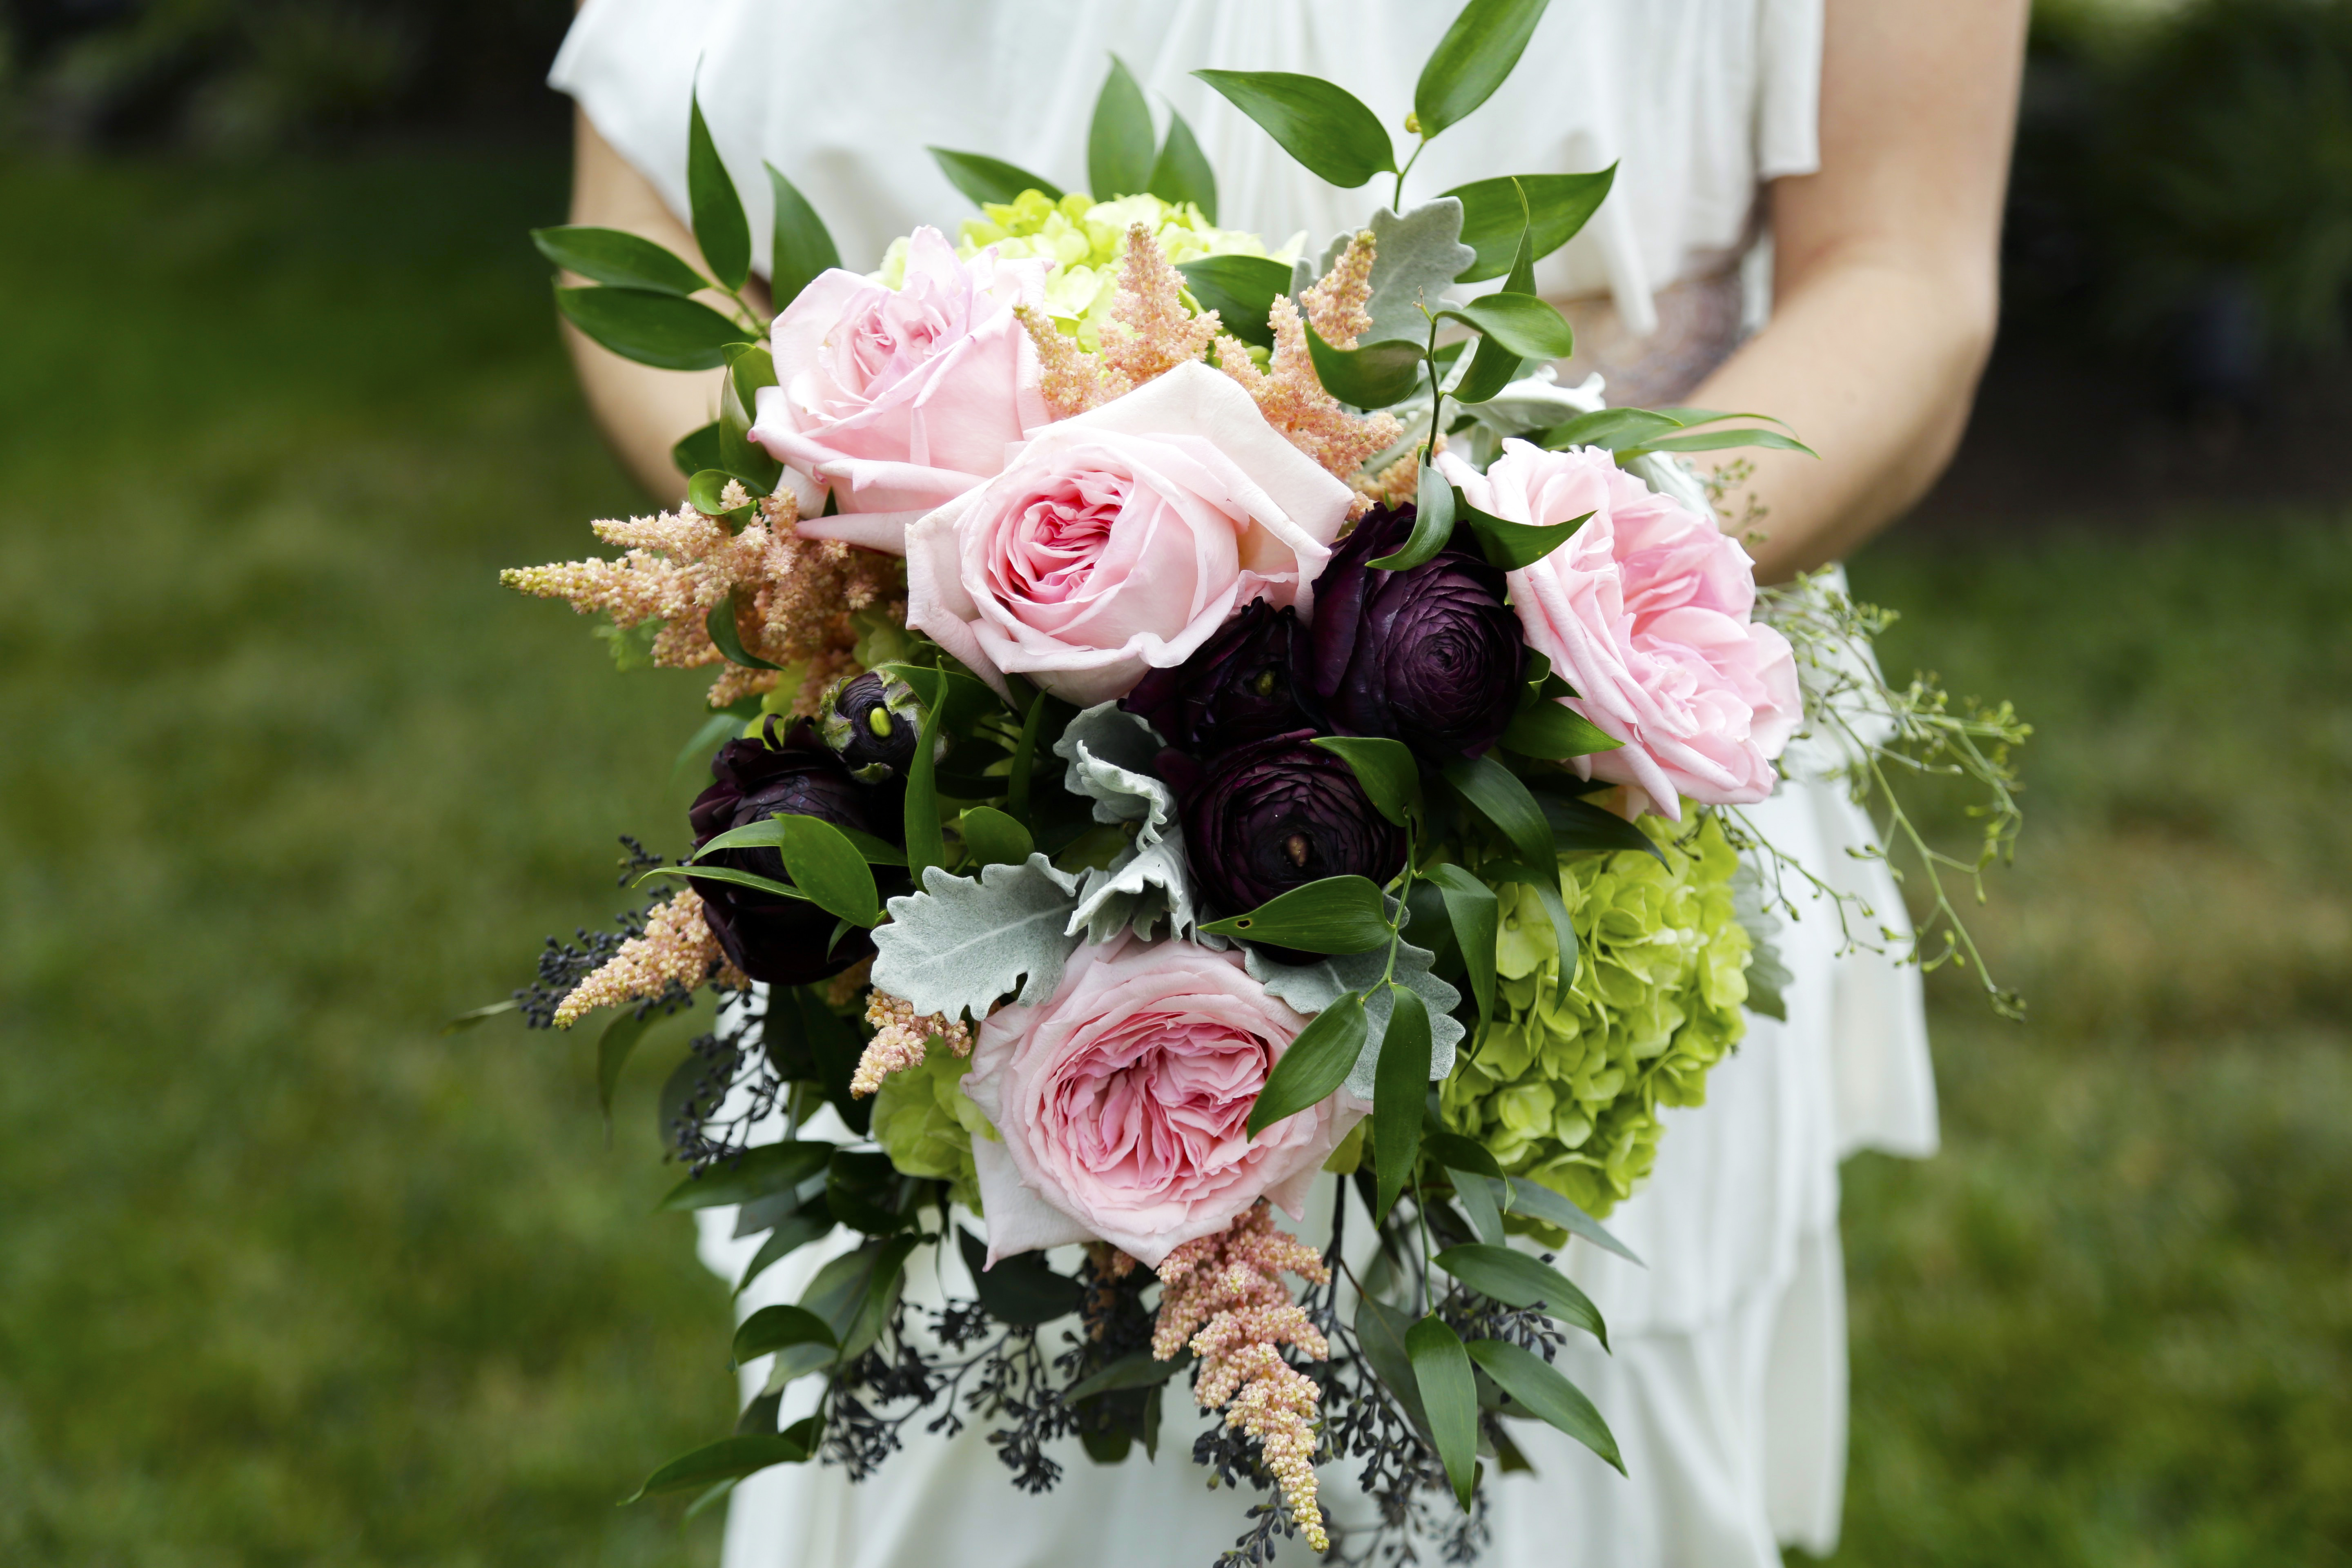 Vintage Artificial Mixed Flowers Bridal Bouquet Wedding Bride/Bridesmaid Flower 